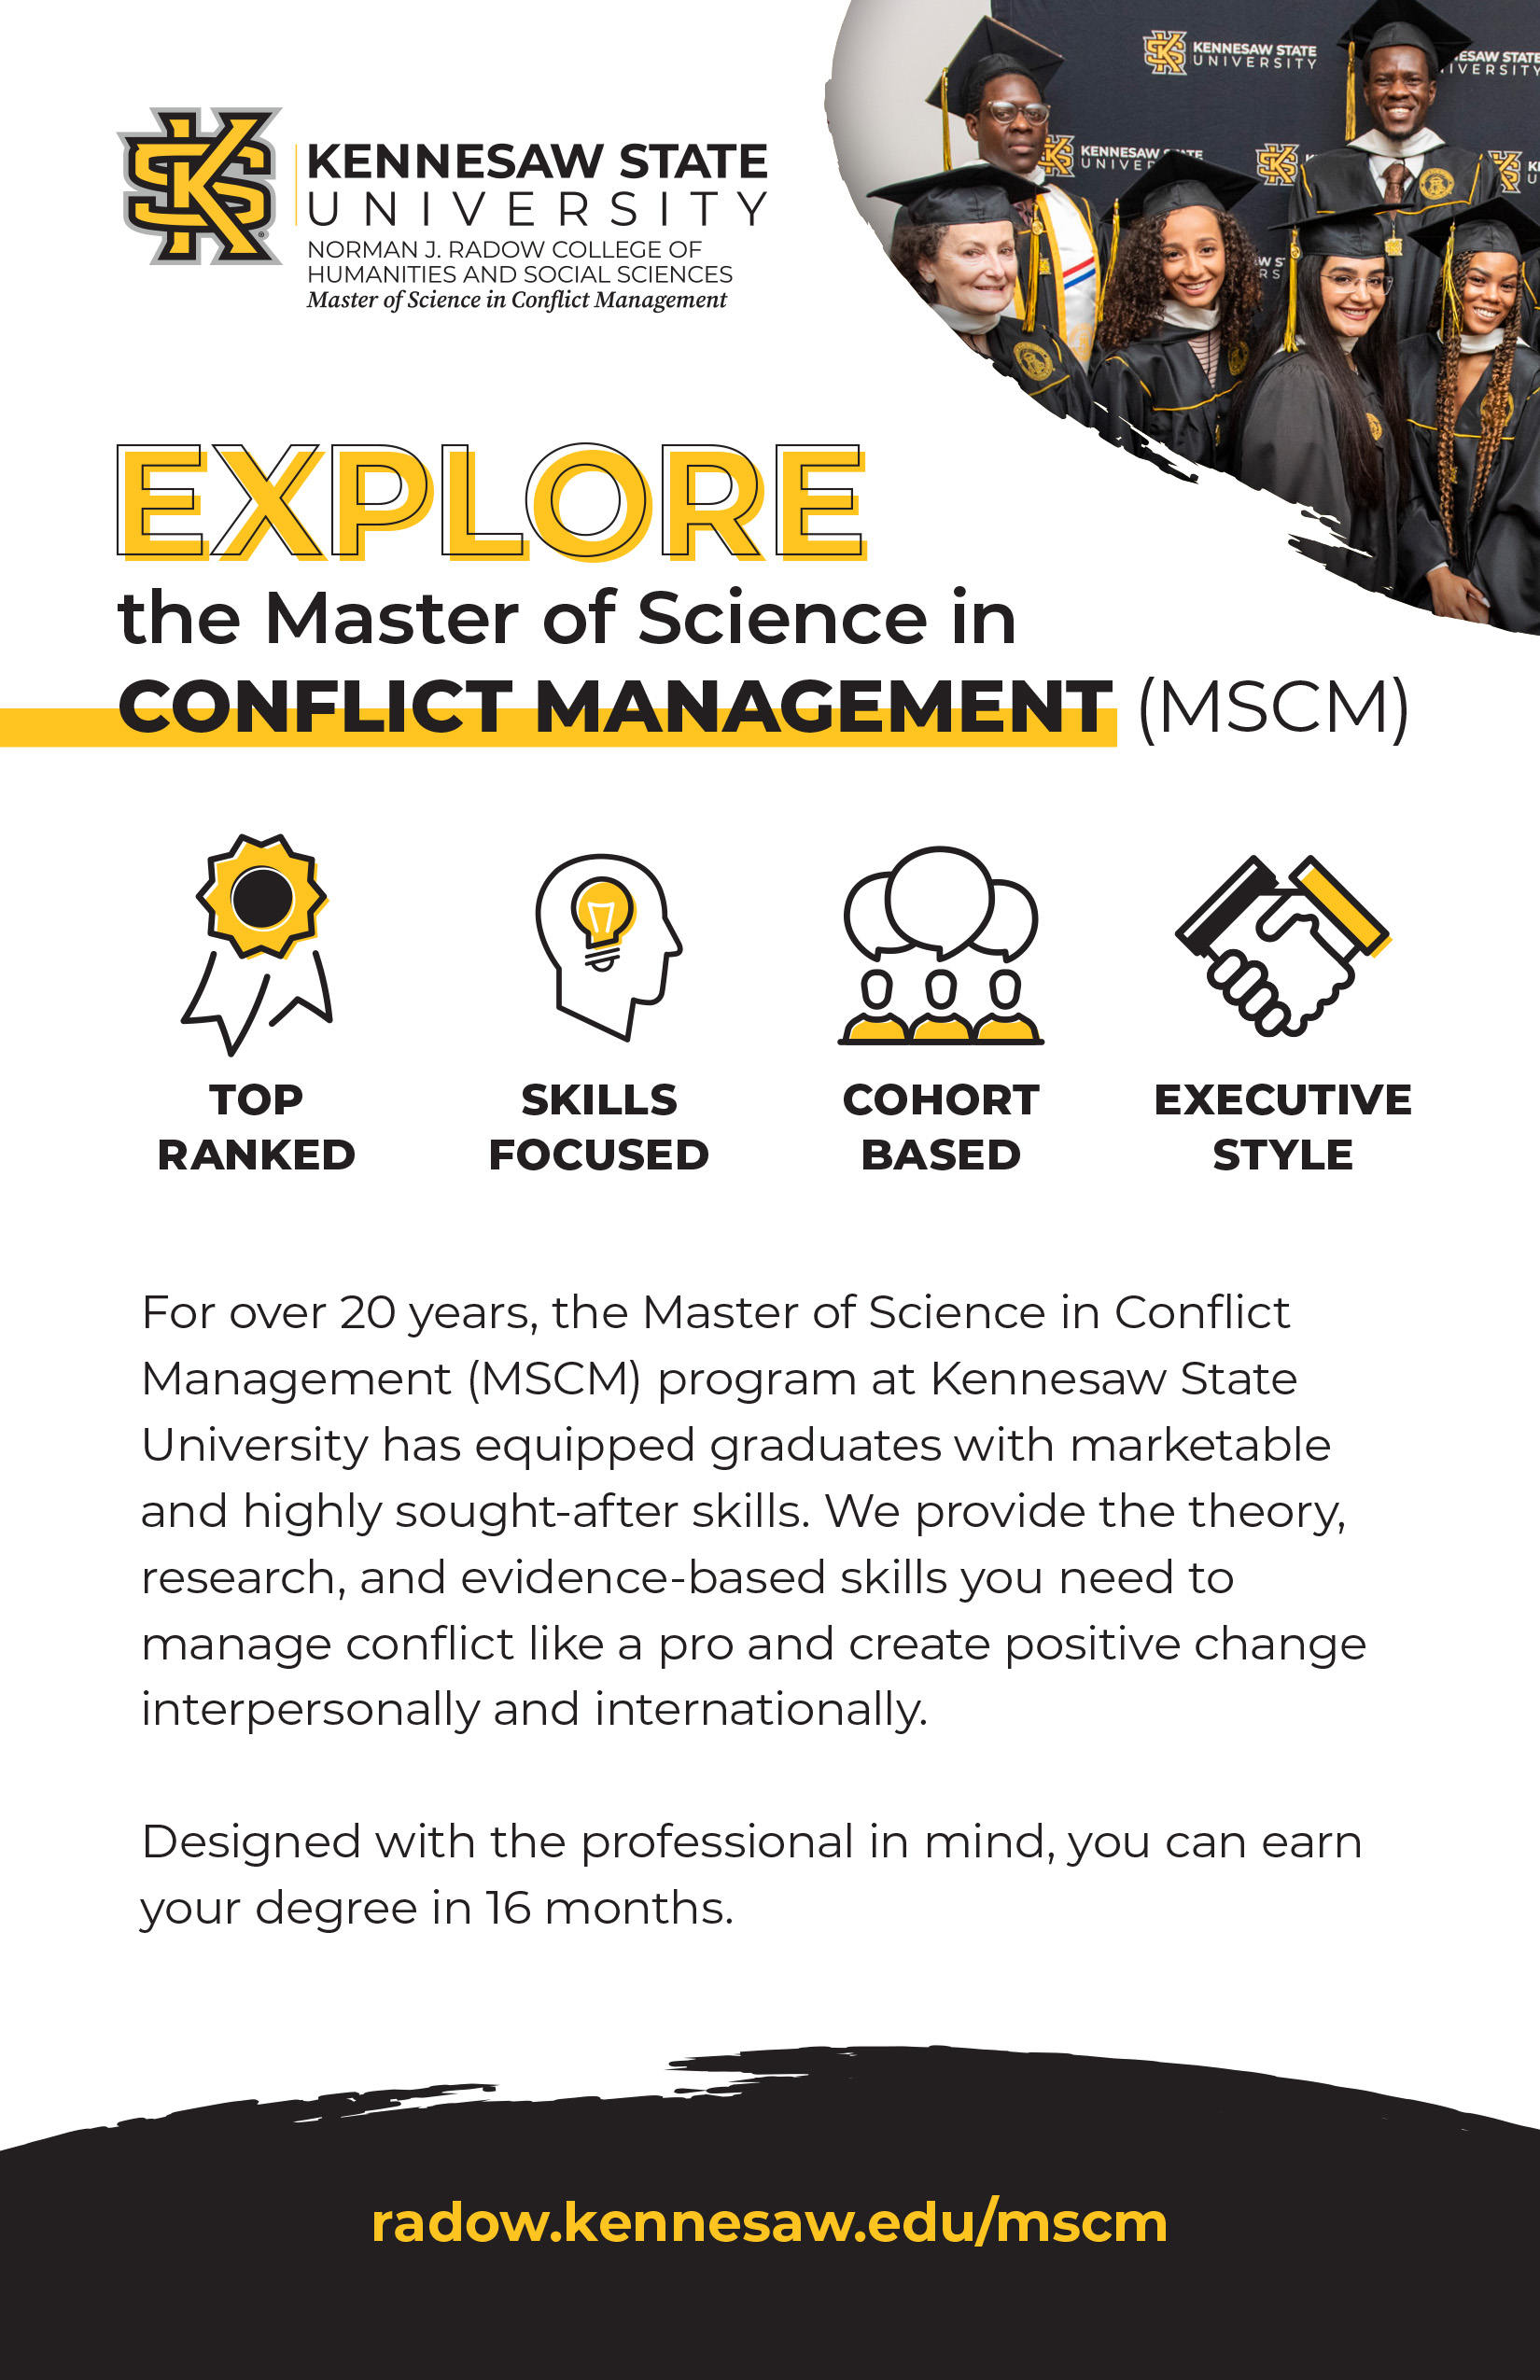 Explore the MSCM